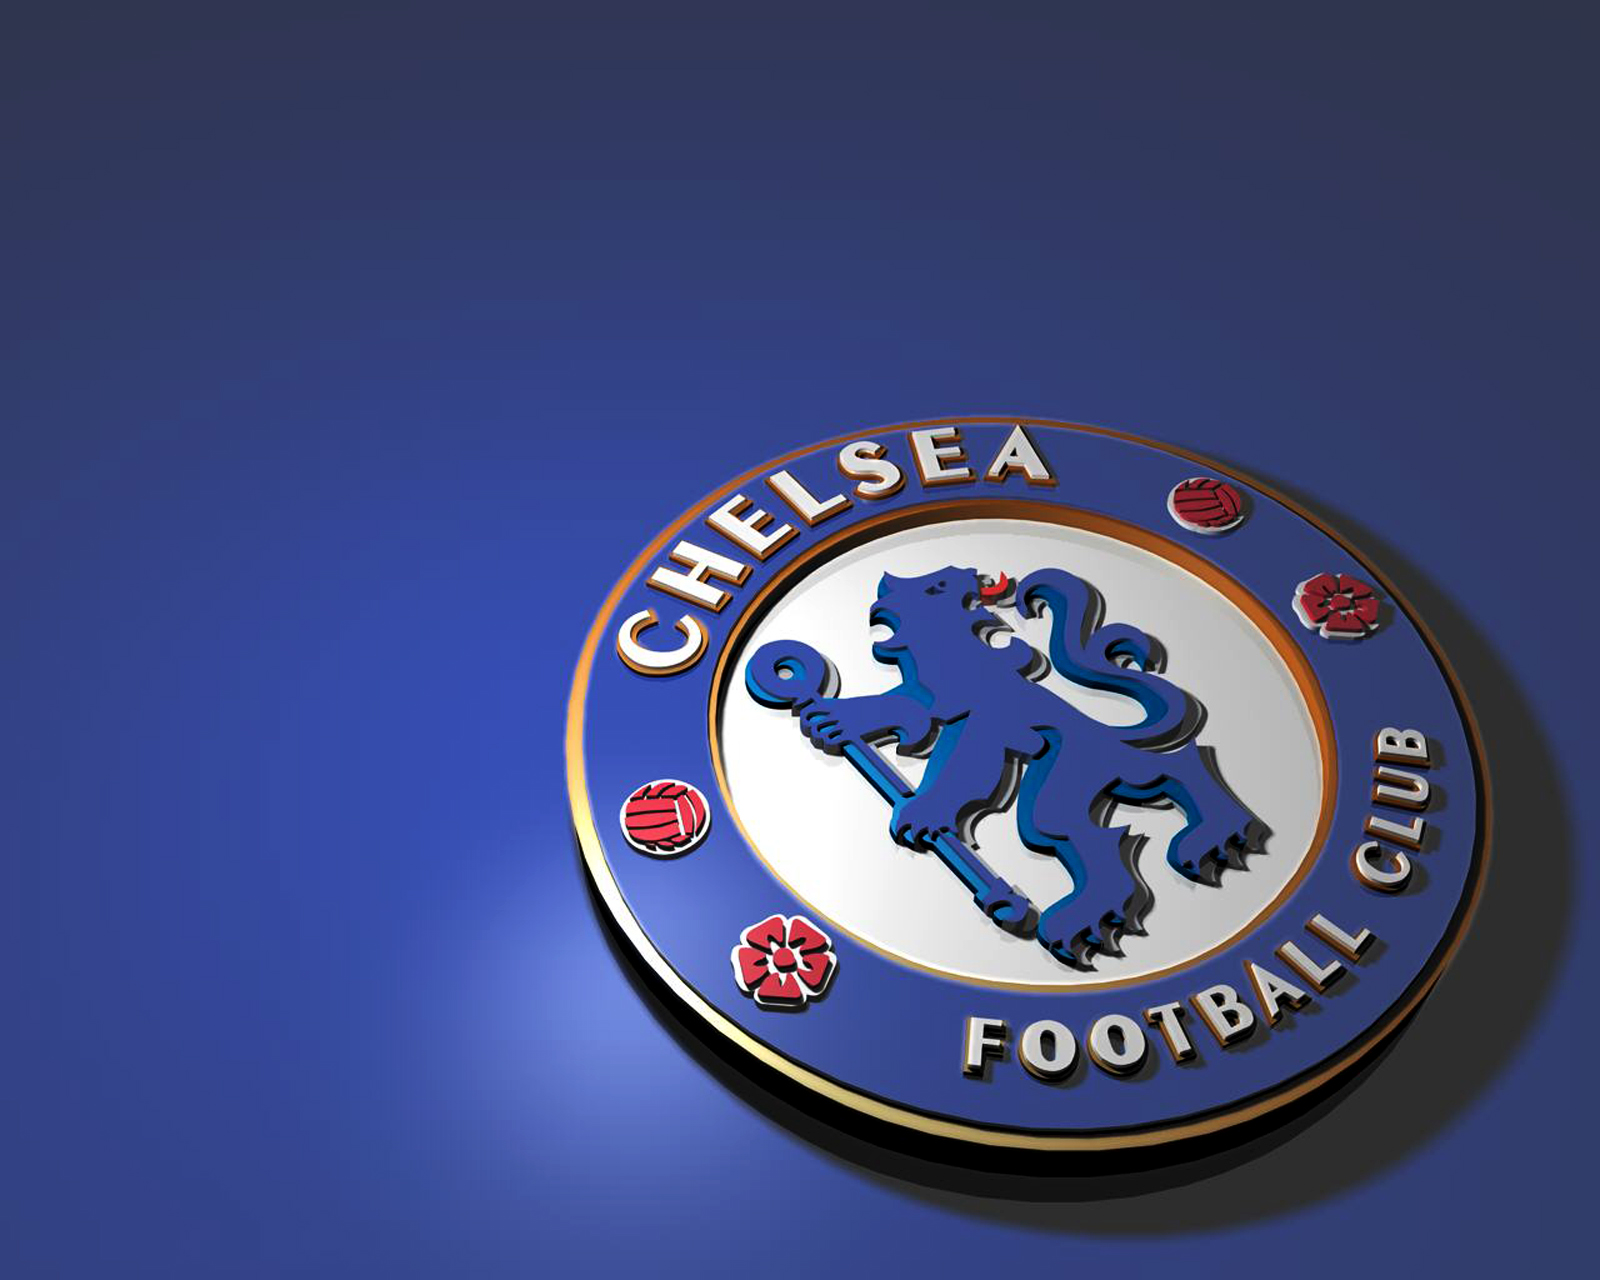 Chelsea Football Club Logo HD Wallpaper In